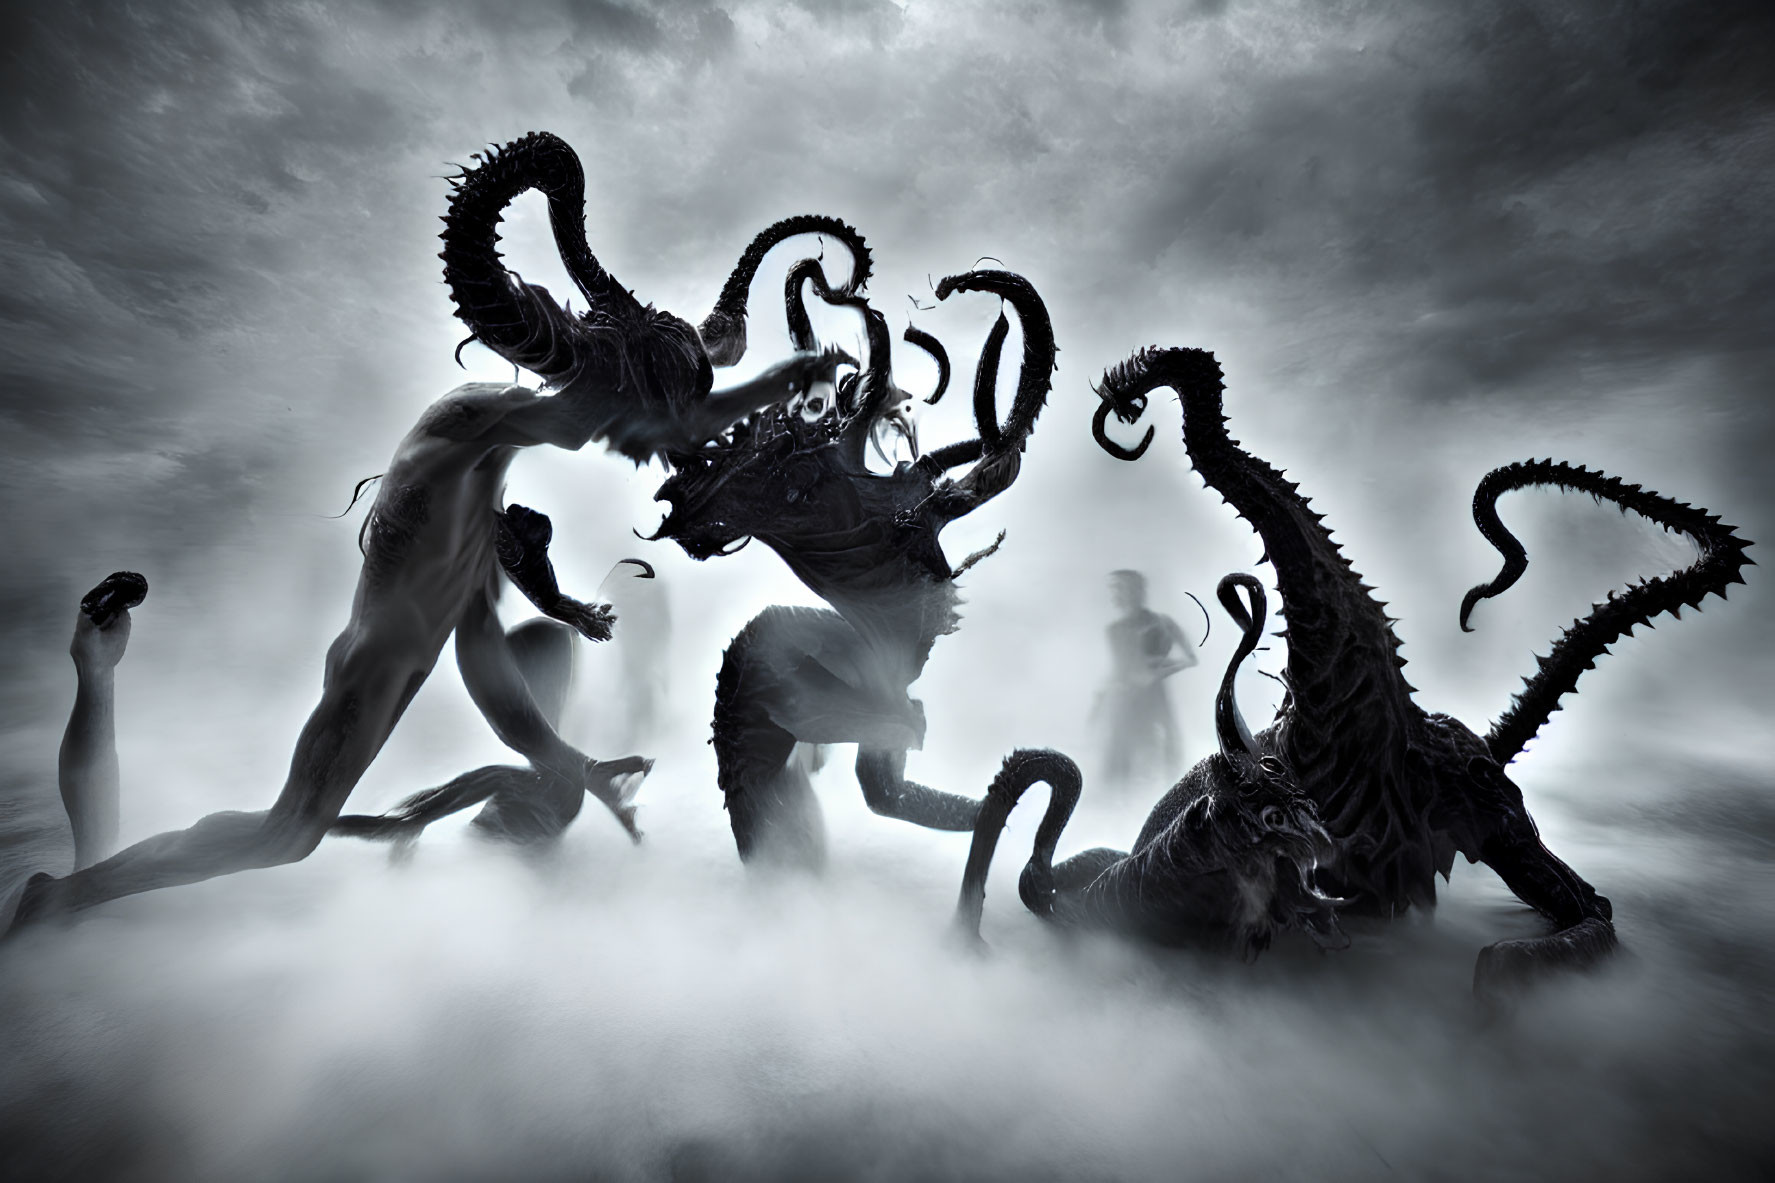 Silhouetted figures battling dark tentacled monsters in mystical scene